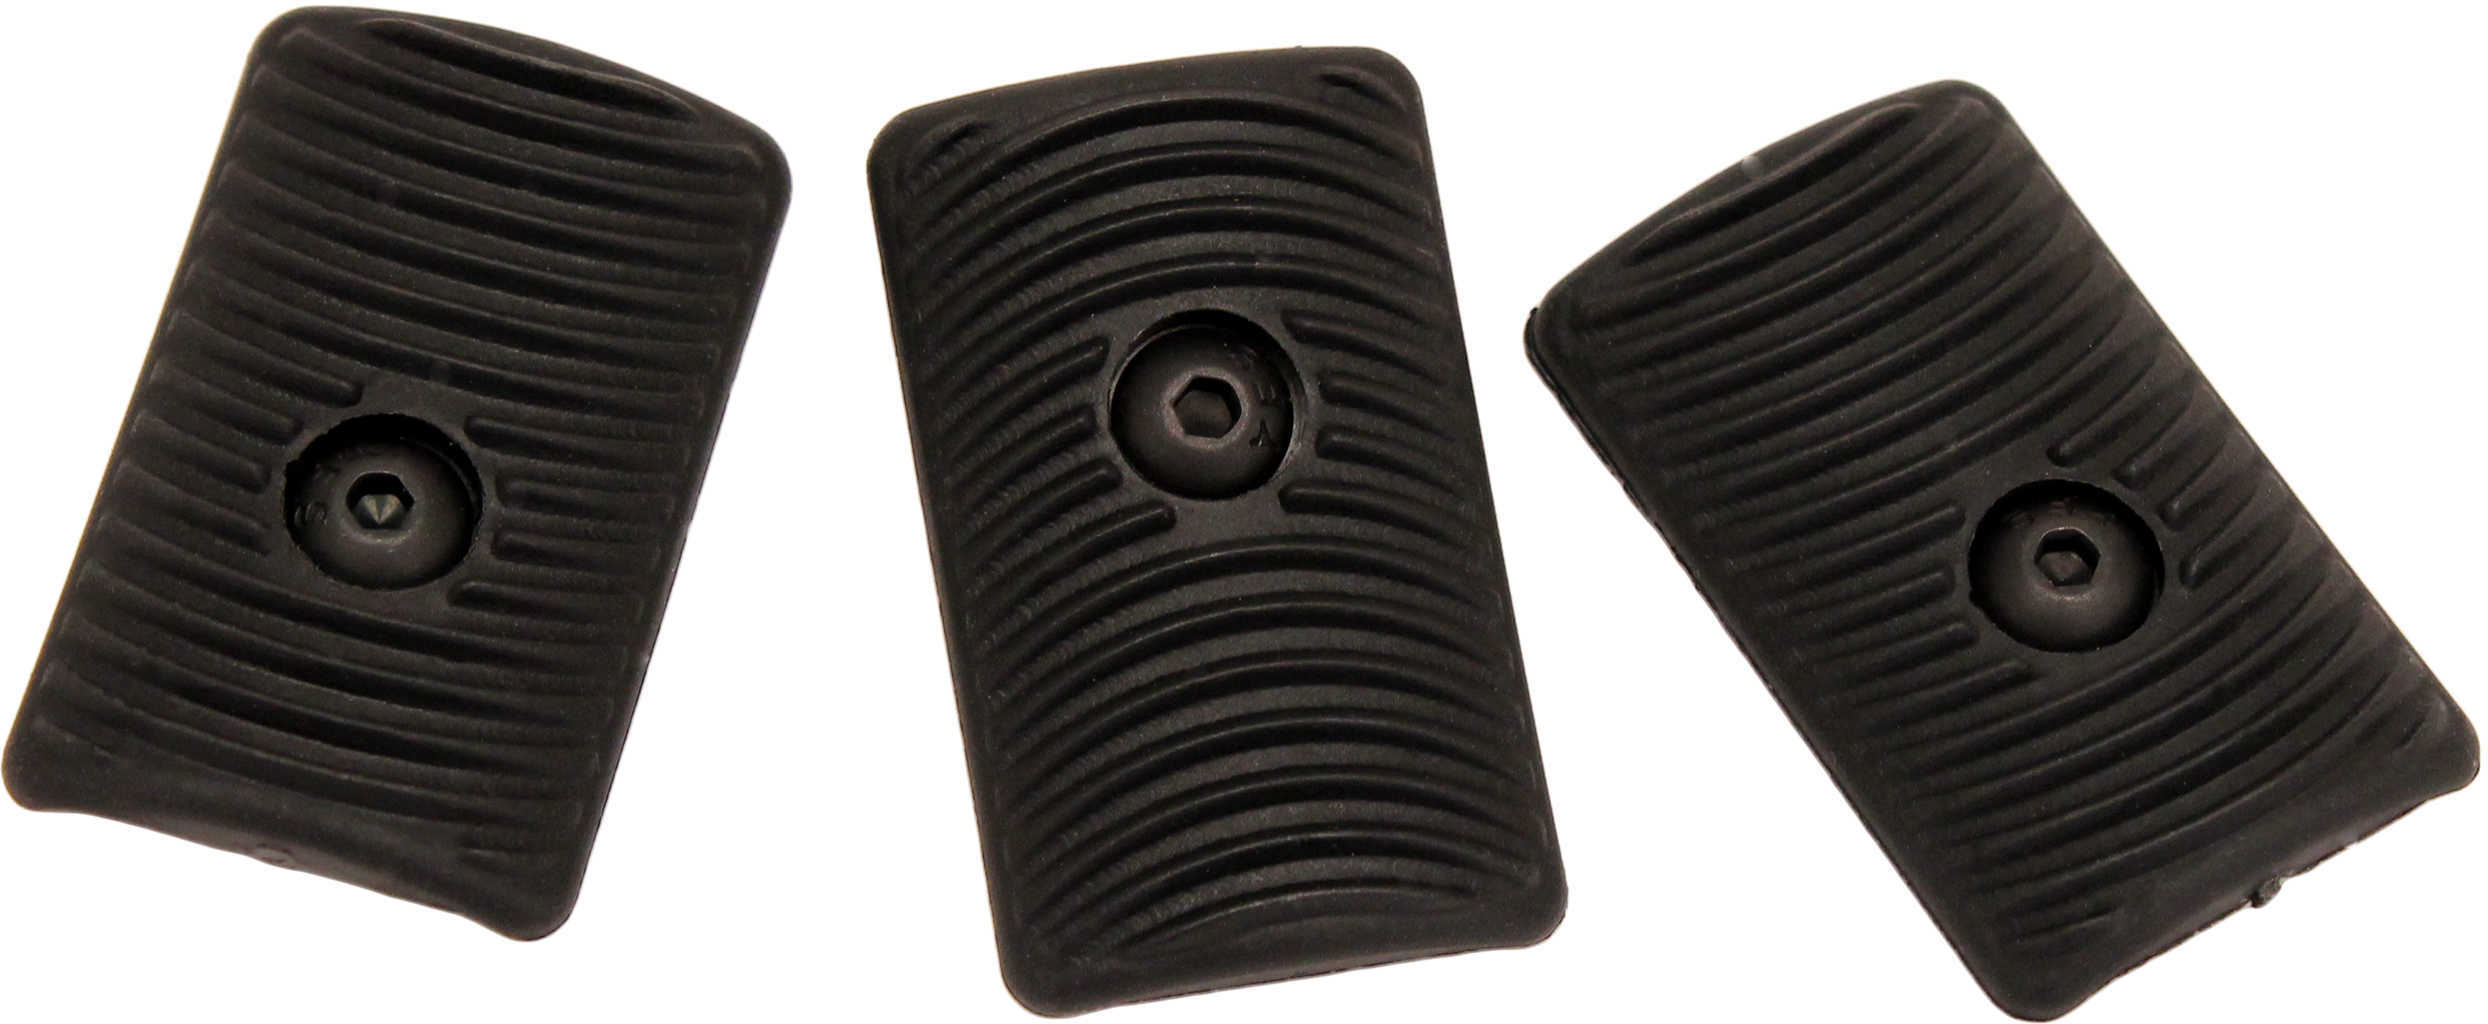 Ergo Rigid Polymer EZ Mount KeyMod Slot Covers, 3 Pack, Black